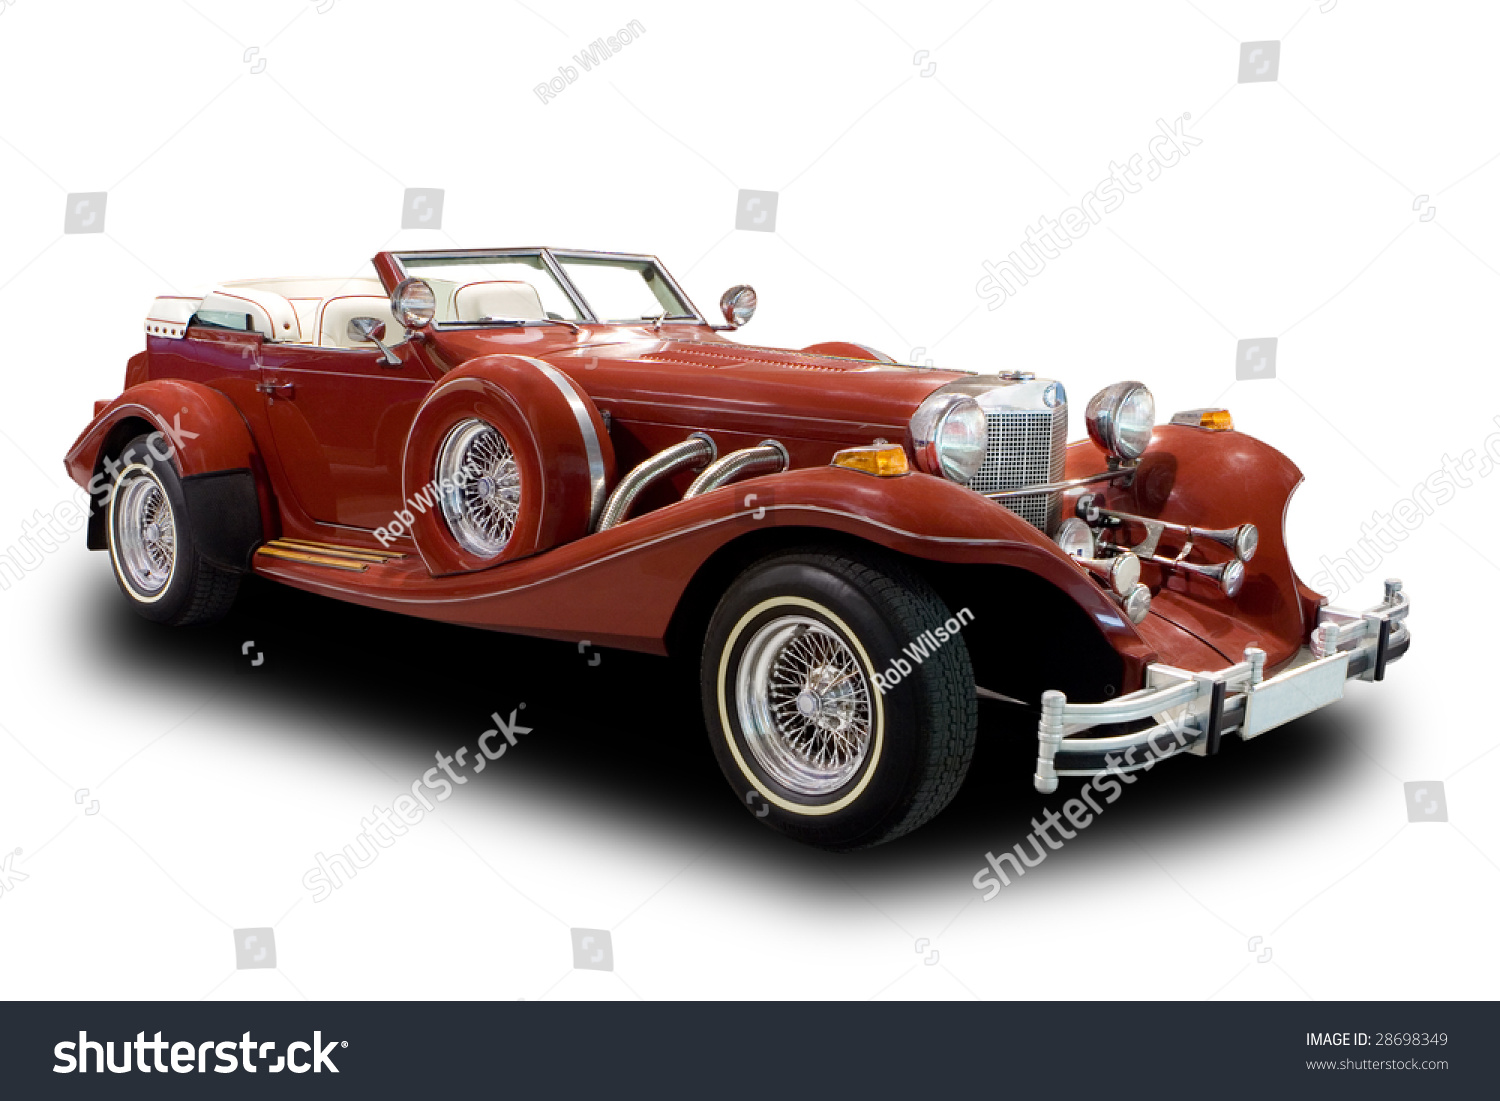 Antique Car Stock Photo 28698349 : Shutterstock